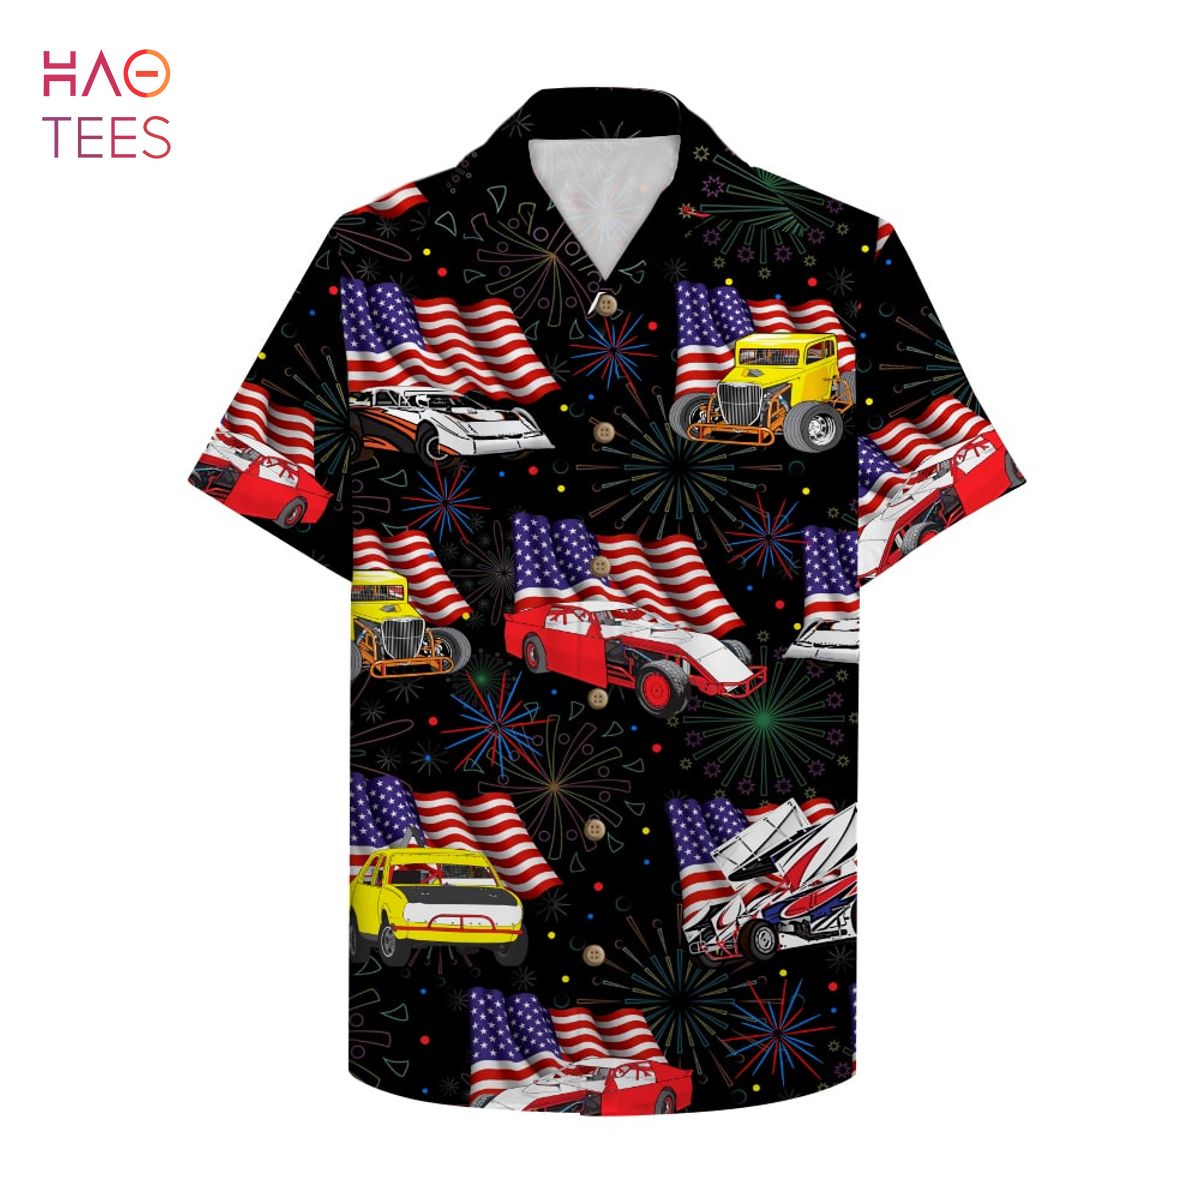 Dirt Track Racing Hawaiian Shirt – Car and Flag Pattern